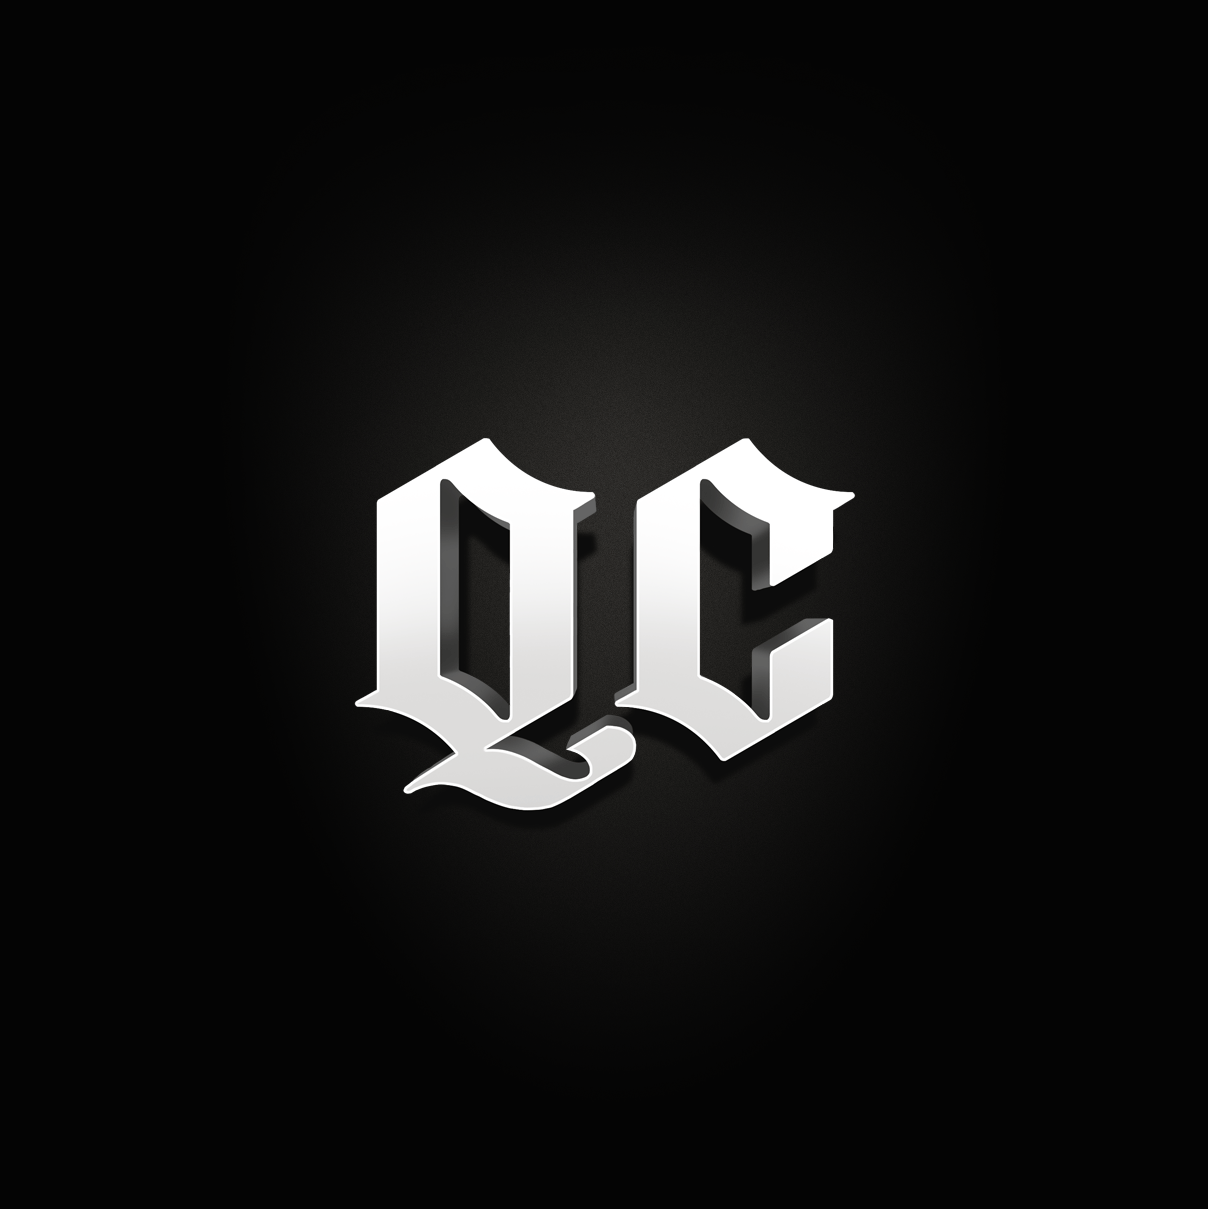 Quincy Crew Perkenalkan Roster Baru Jelang DPC 2021-2022, Pertahankan Dua Wajah Lama